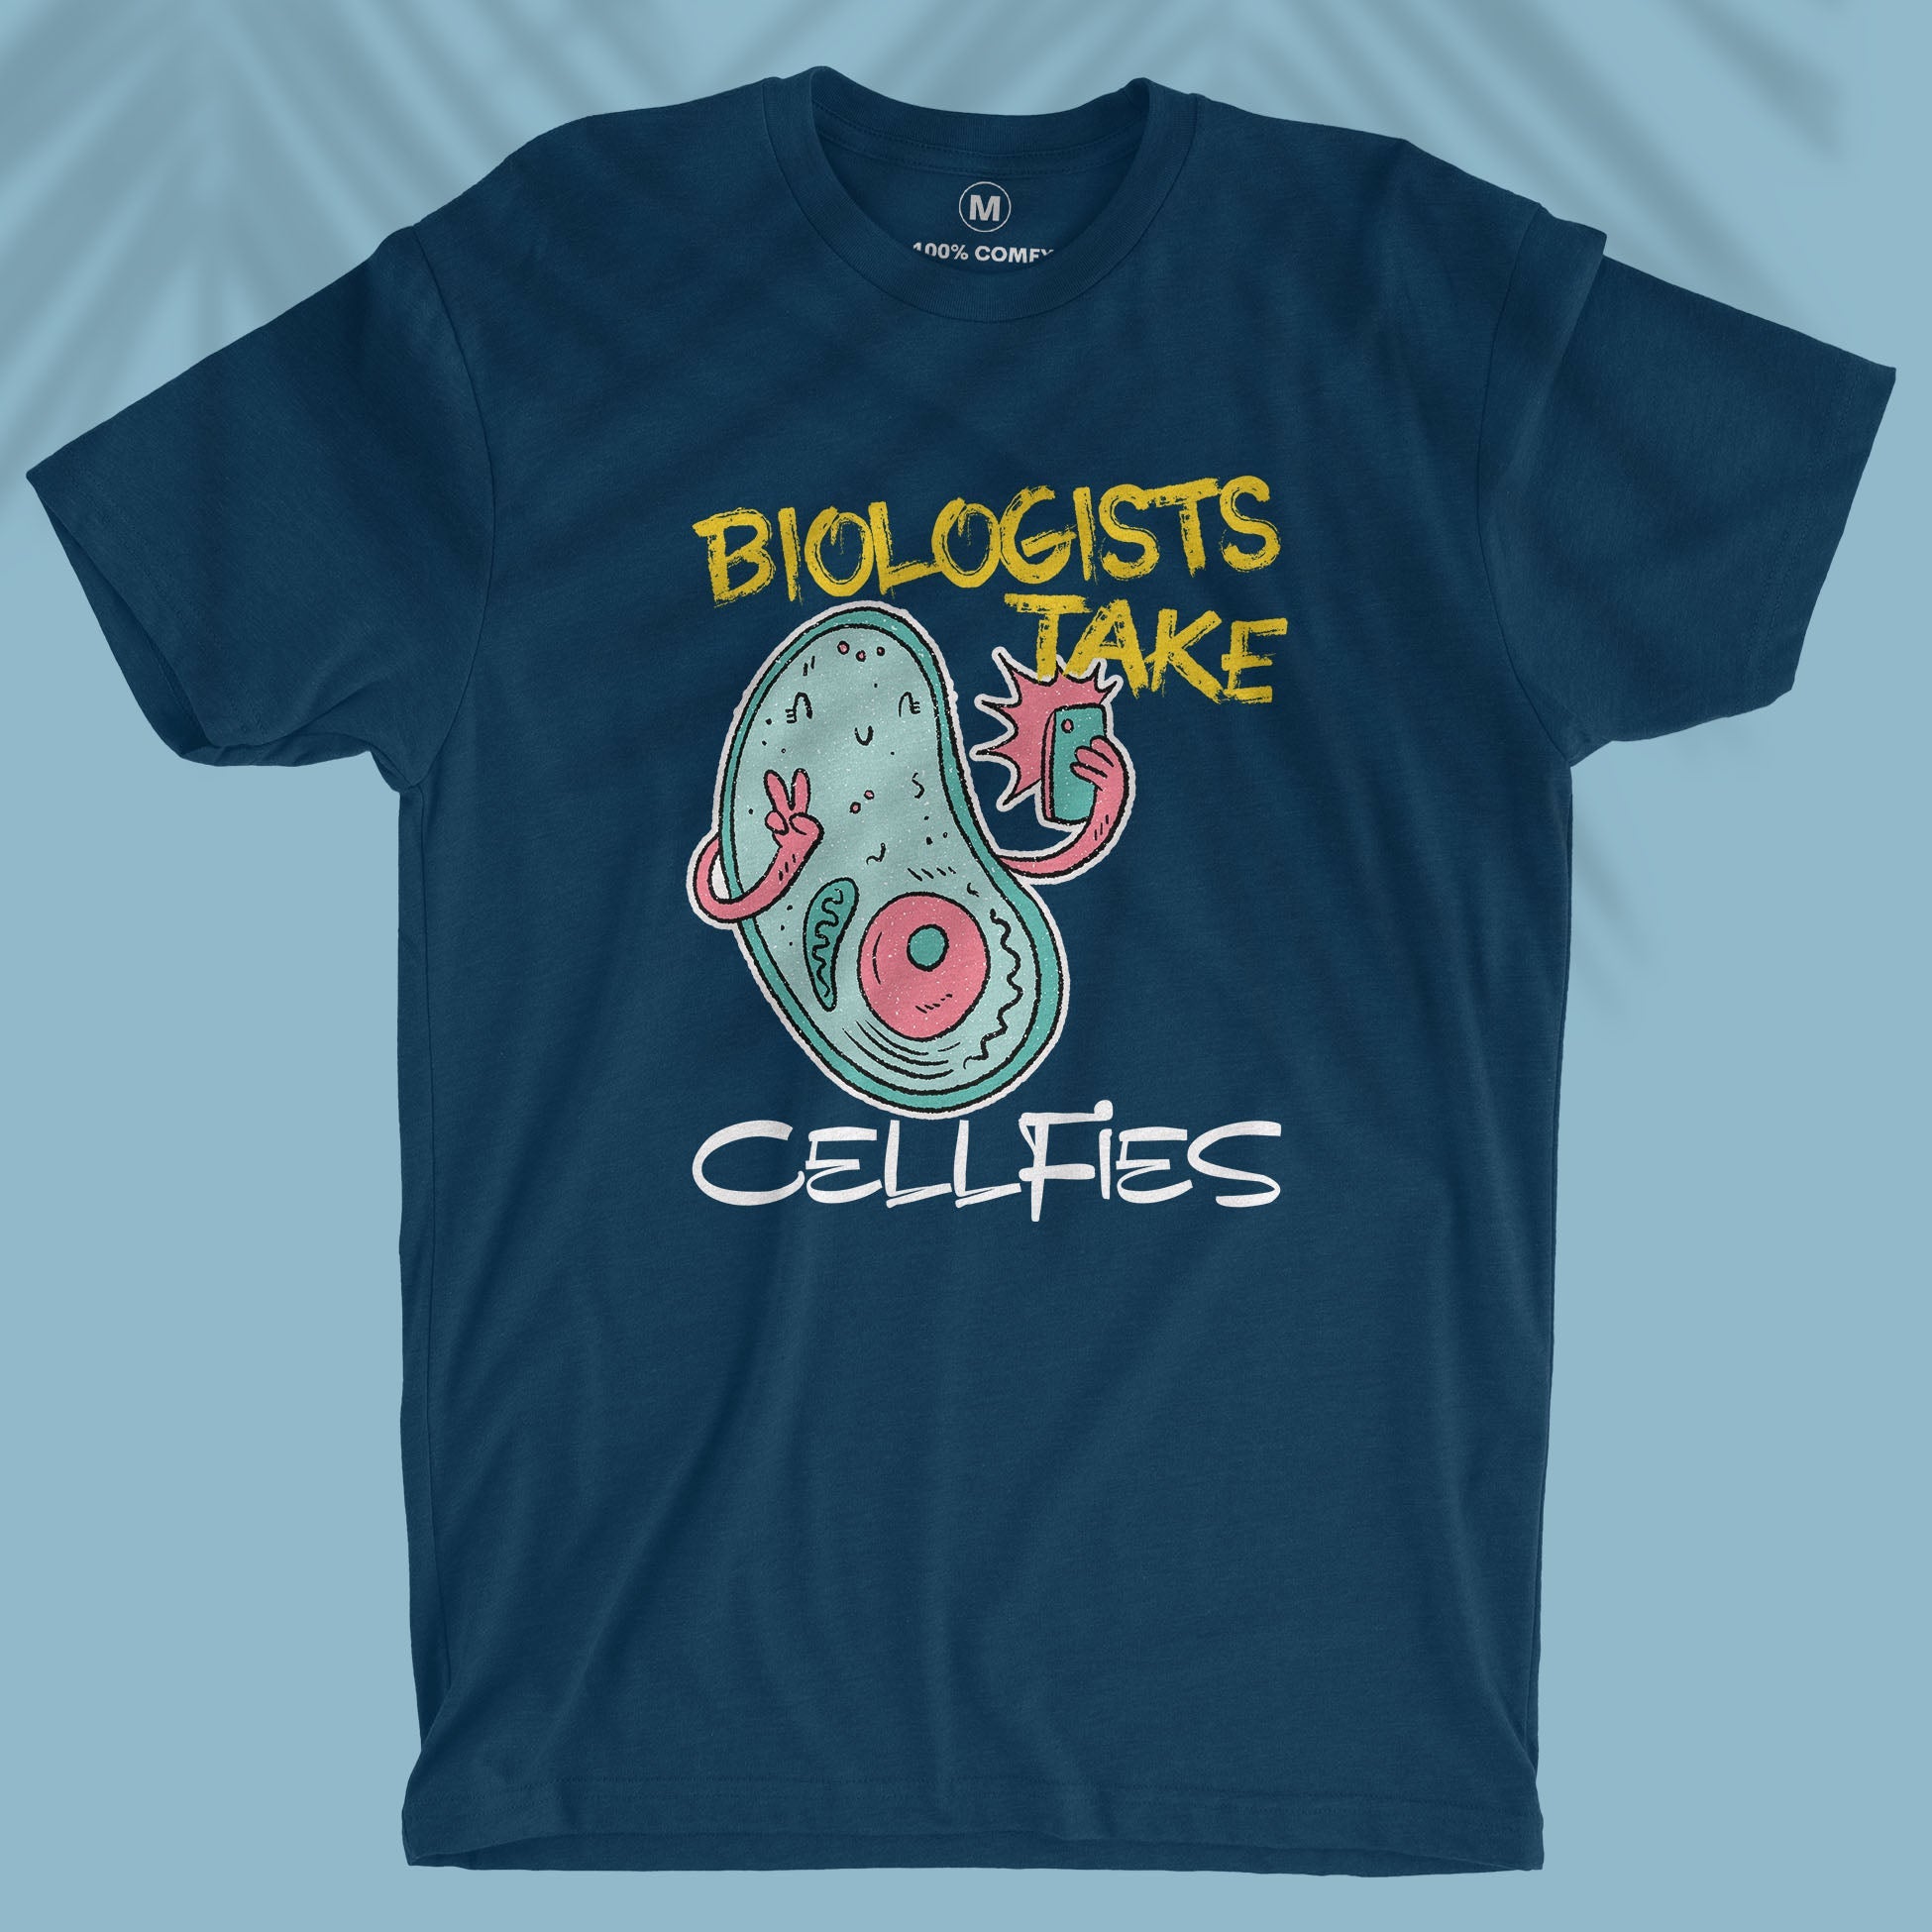 Cellfie - Unisex T-shirt